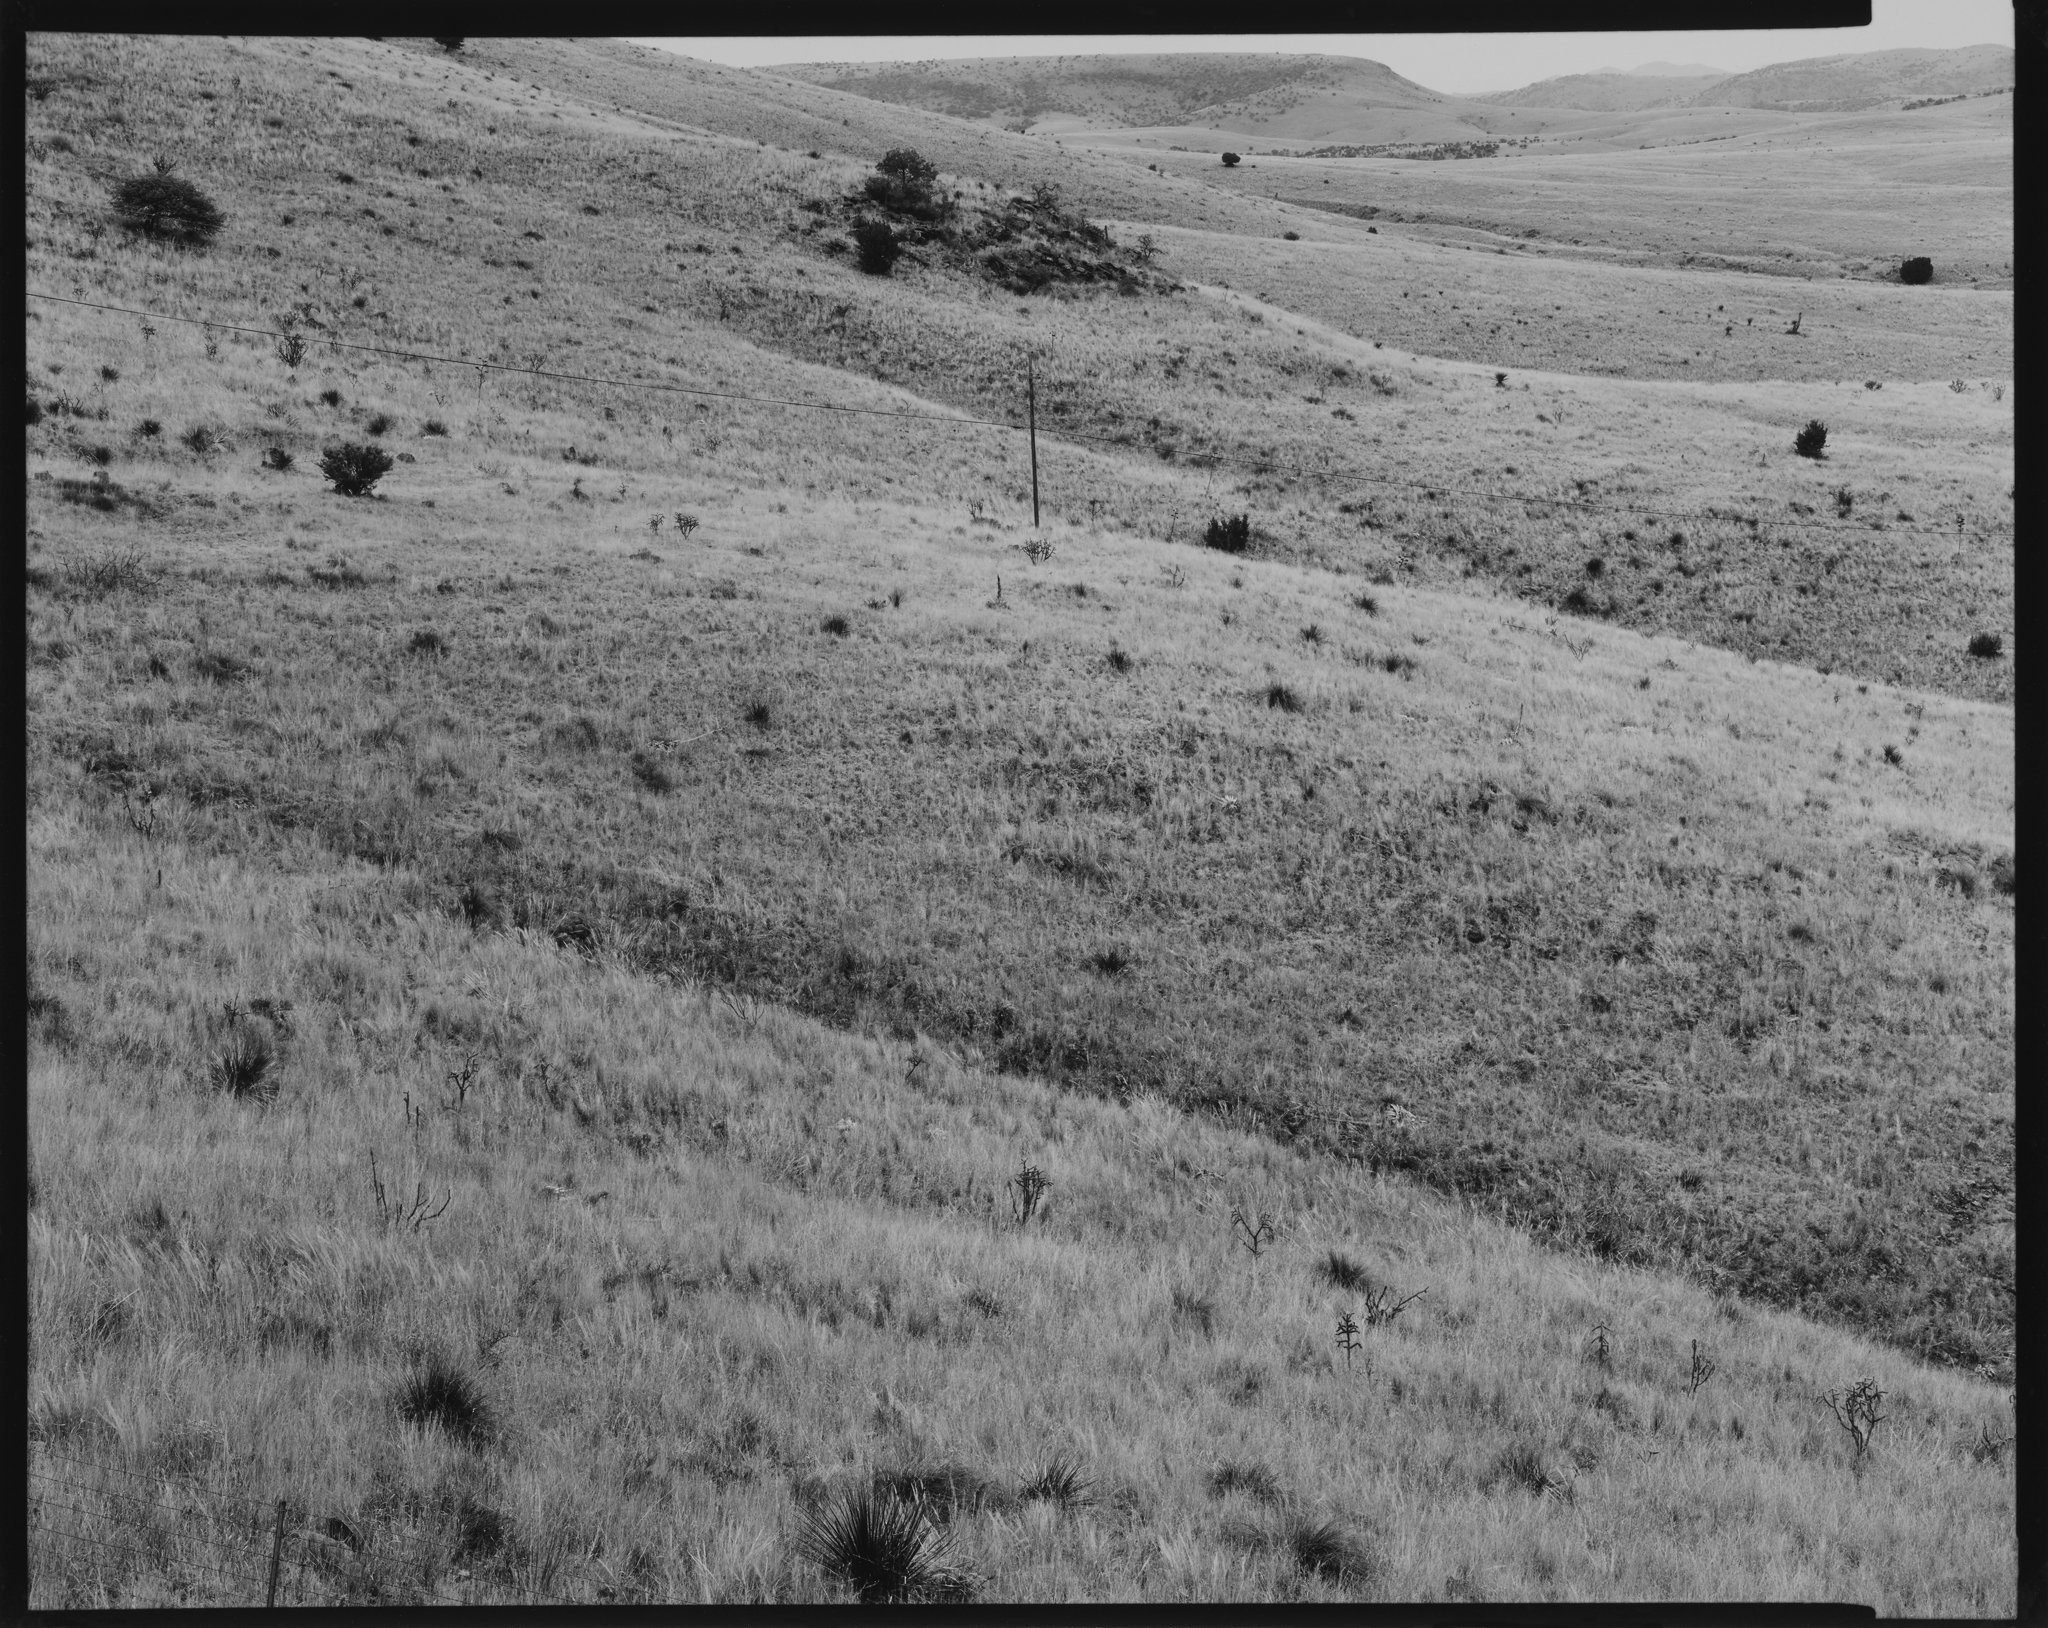 American Landscapes Portfolio_Grazing Land, Davis Mountains, Texas_1981 © Nick Merrick.jpg